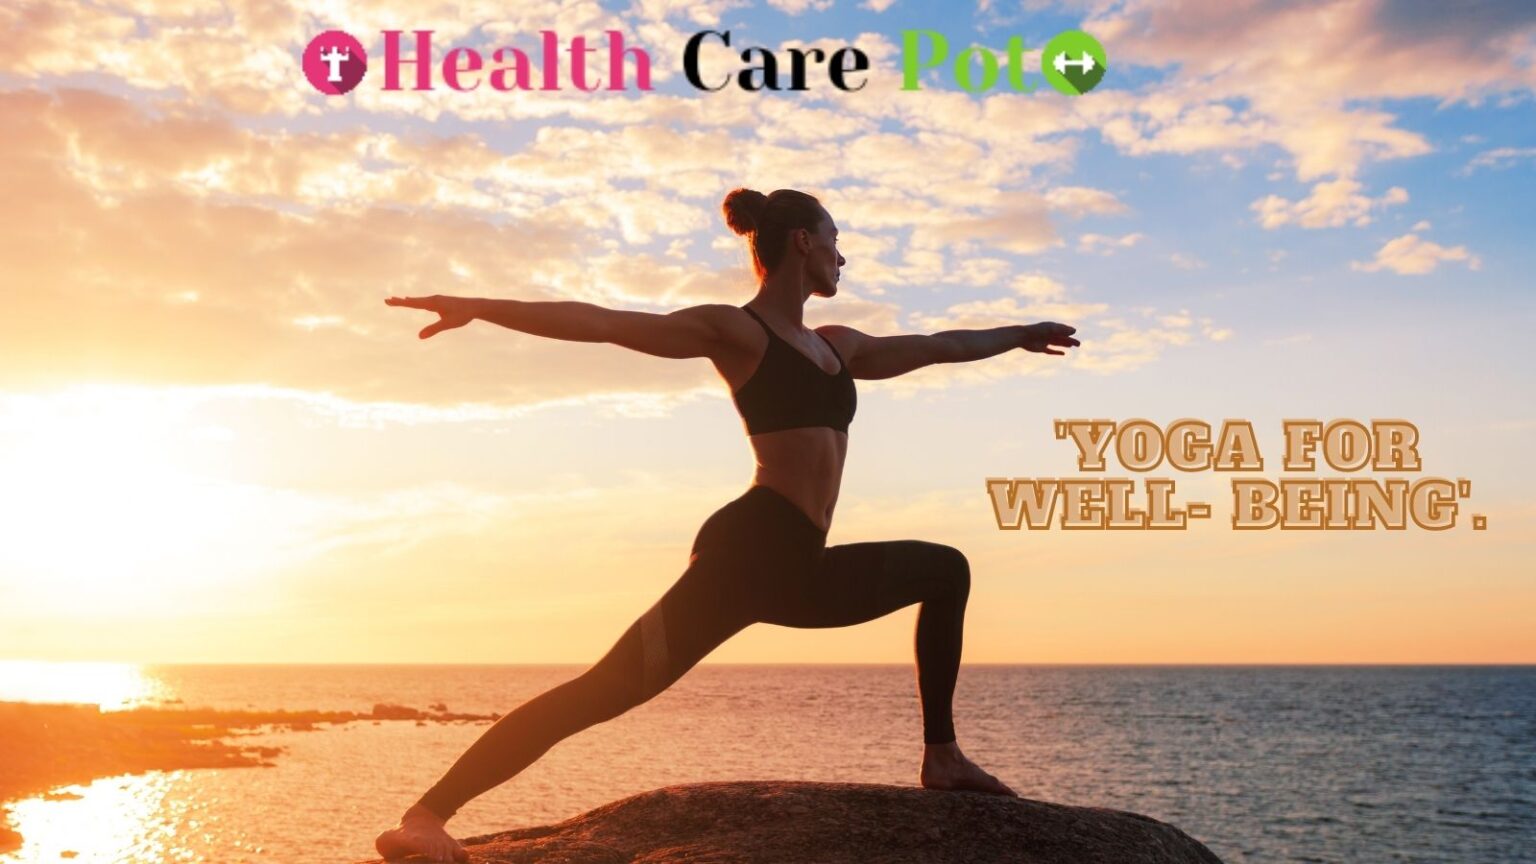 7th International Yoga Day 2021 | Health Care Pot